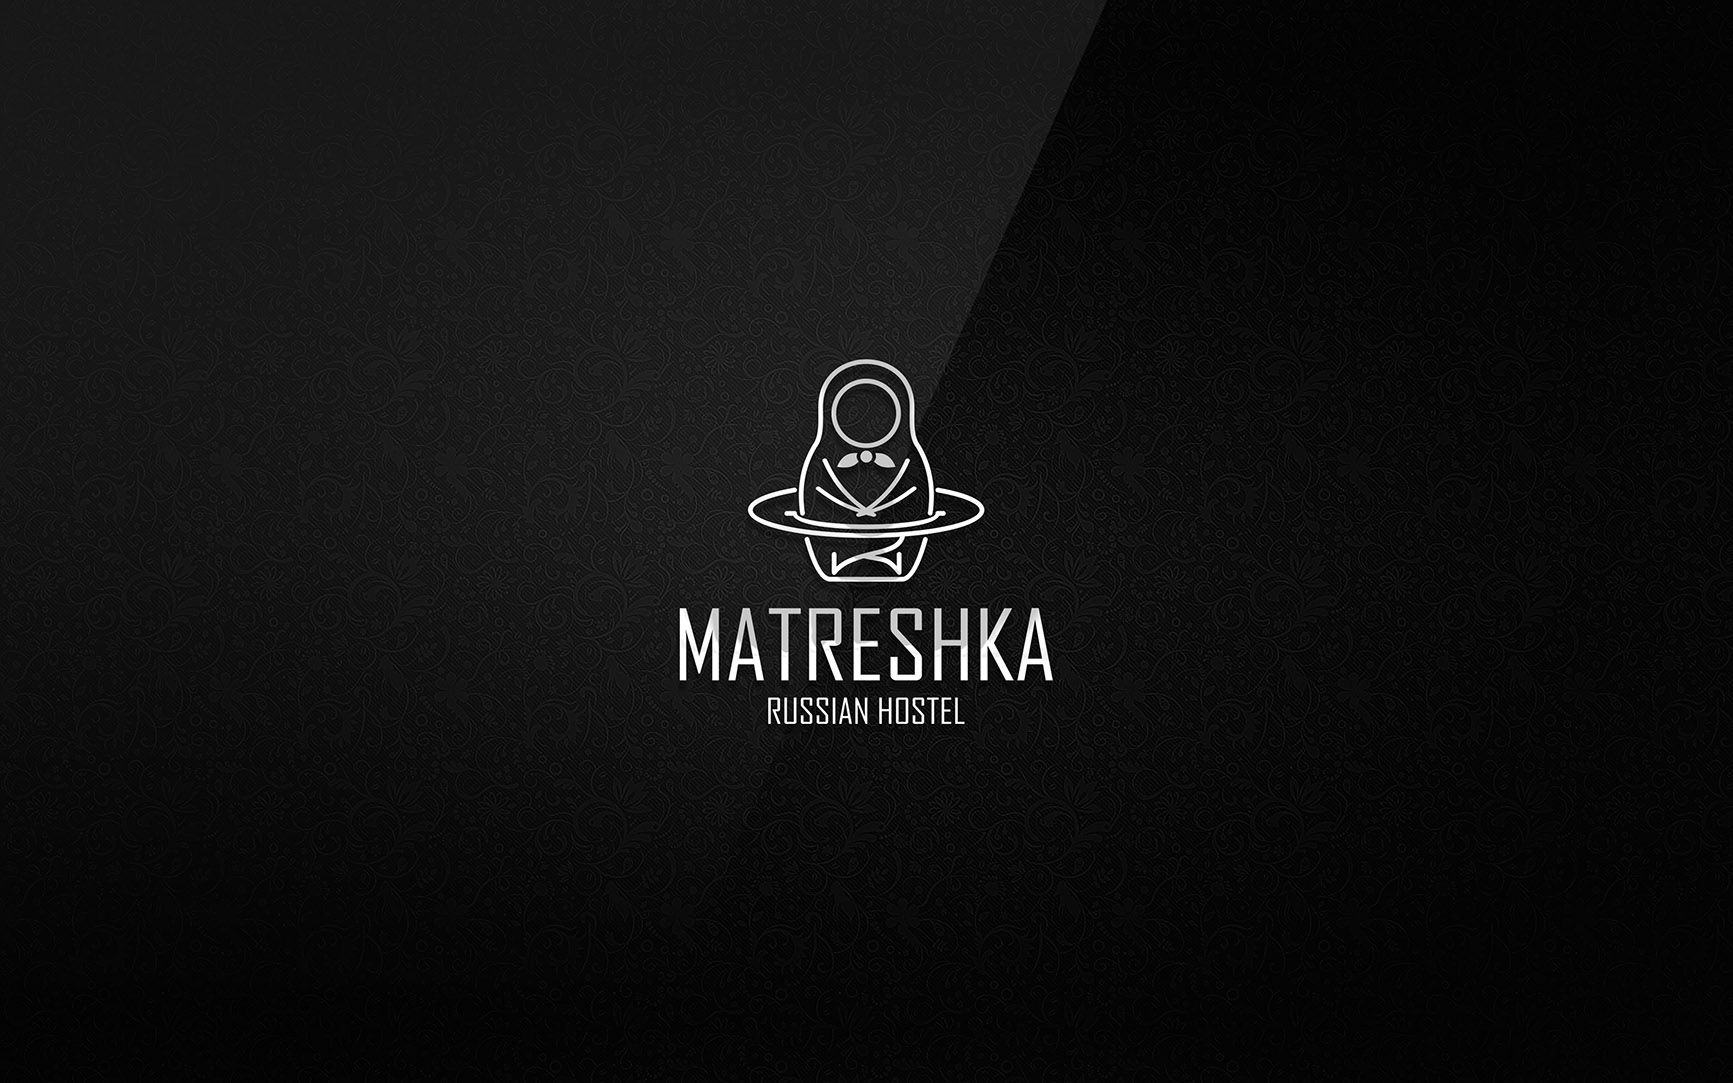 Логотип MATRESHKA Russian hostel - дизайнер cloudlixo